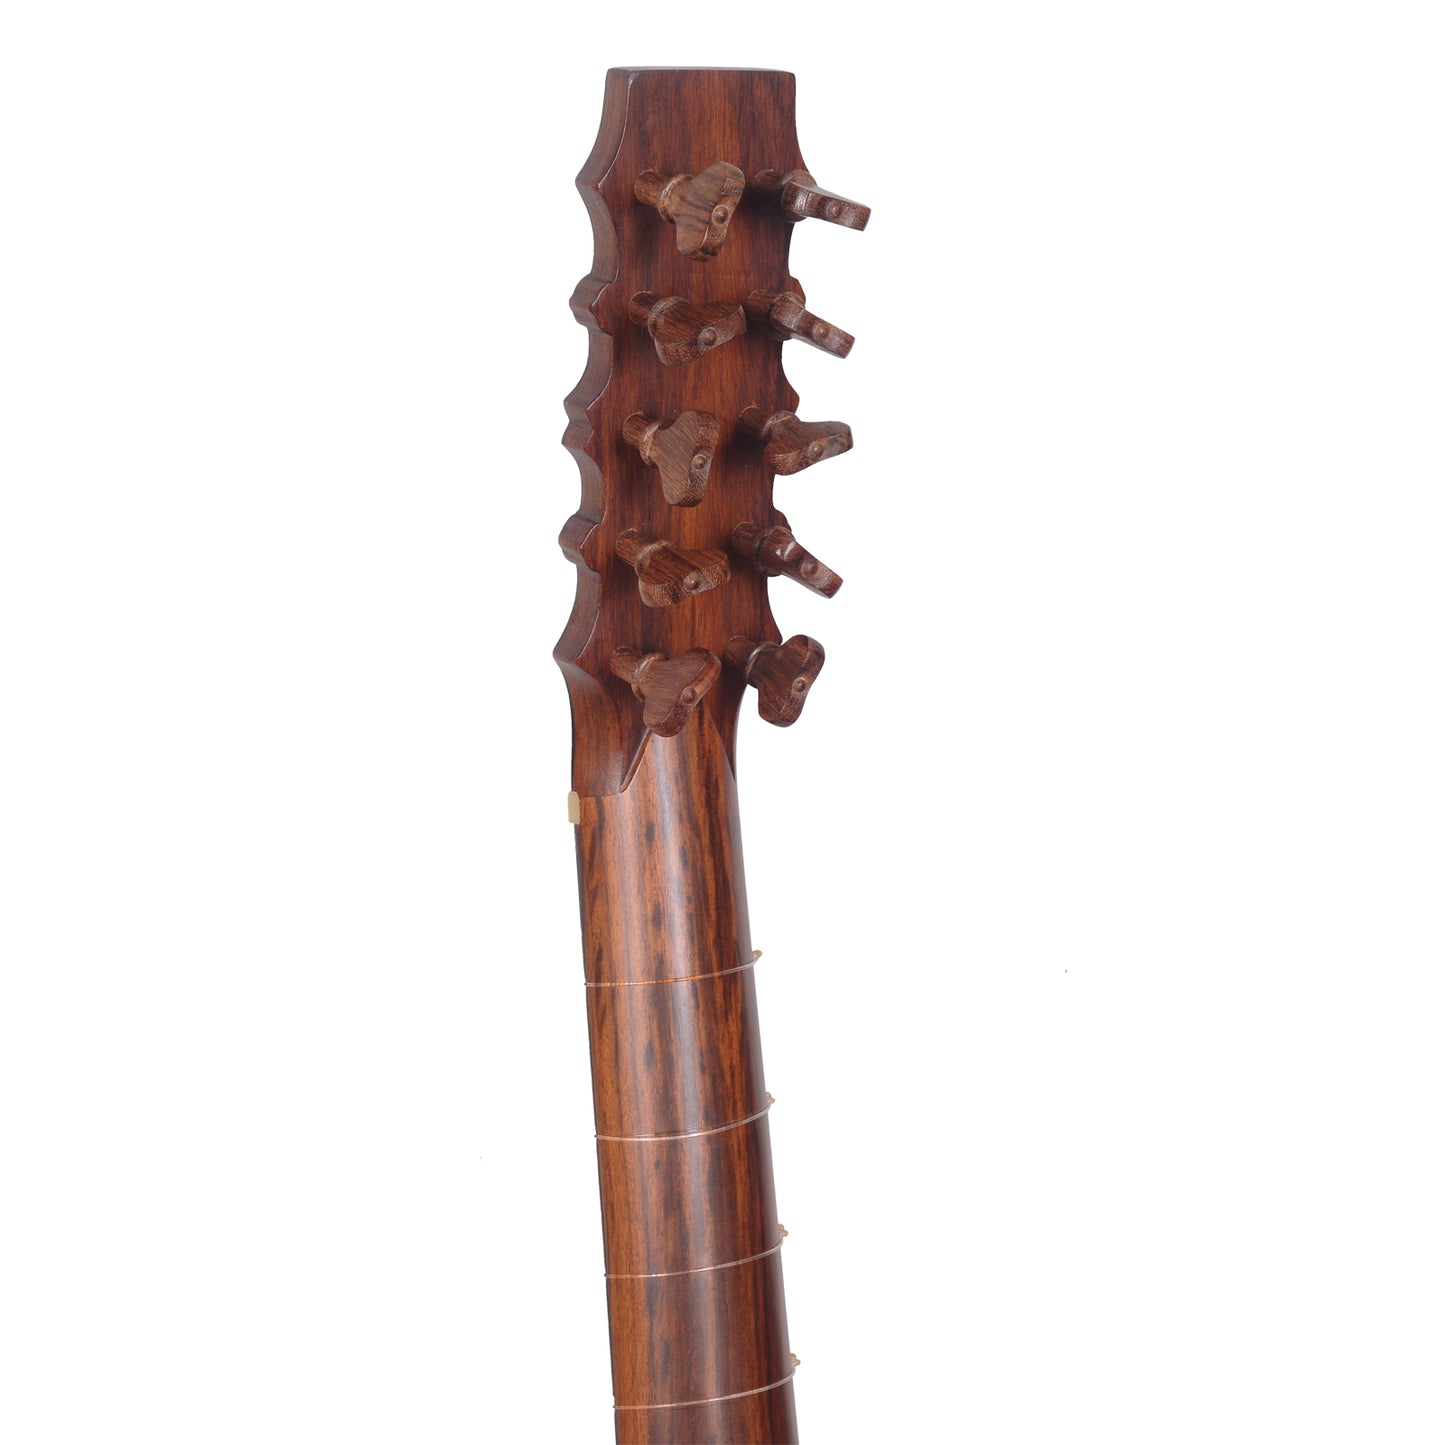 Heartland Sellas Baroque Guitar, 5 Course Left Hand Variegated Walnut Rosewood